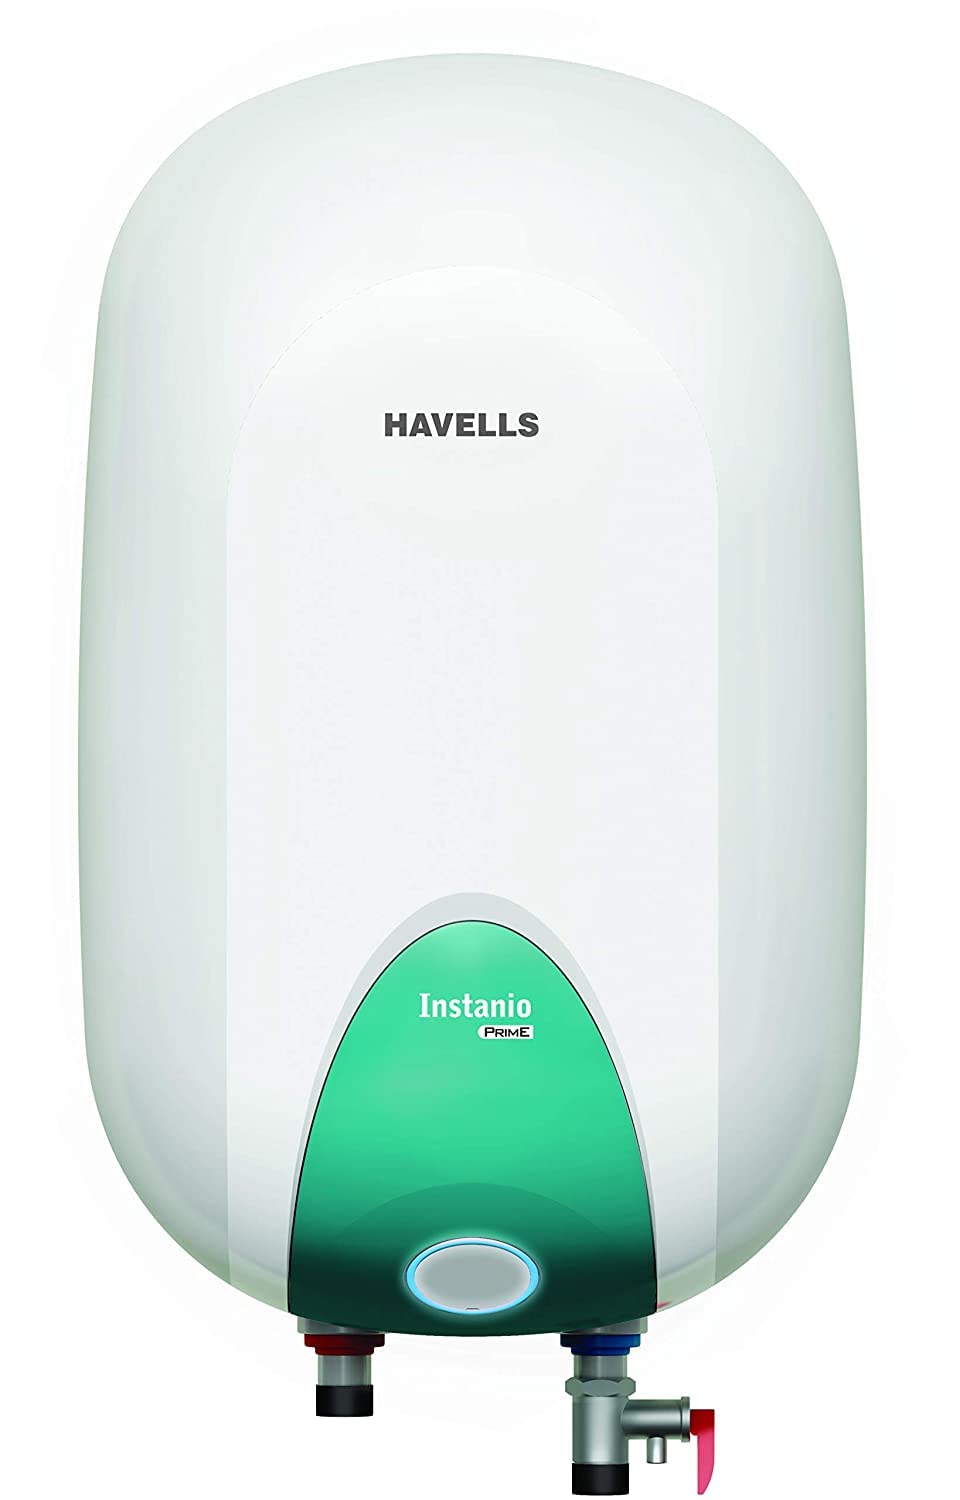 Havells Instanio Prime 15 Litre Storage Water Heater (White Blue)-latest Amazon deals